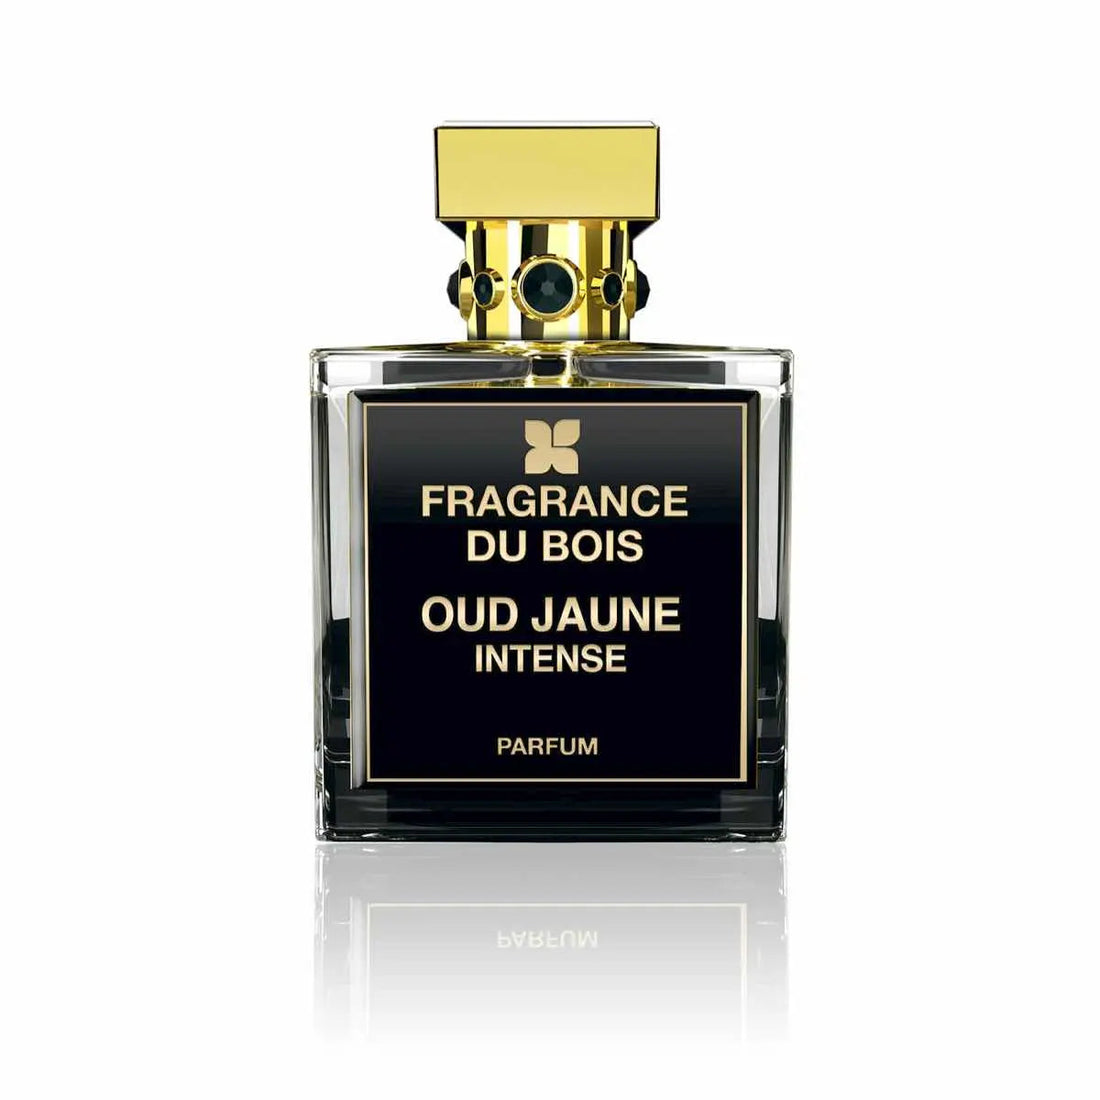 Fragrance du bois Oud Jaune Intense perfume - 50 ml